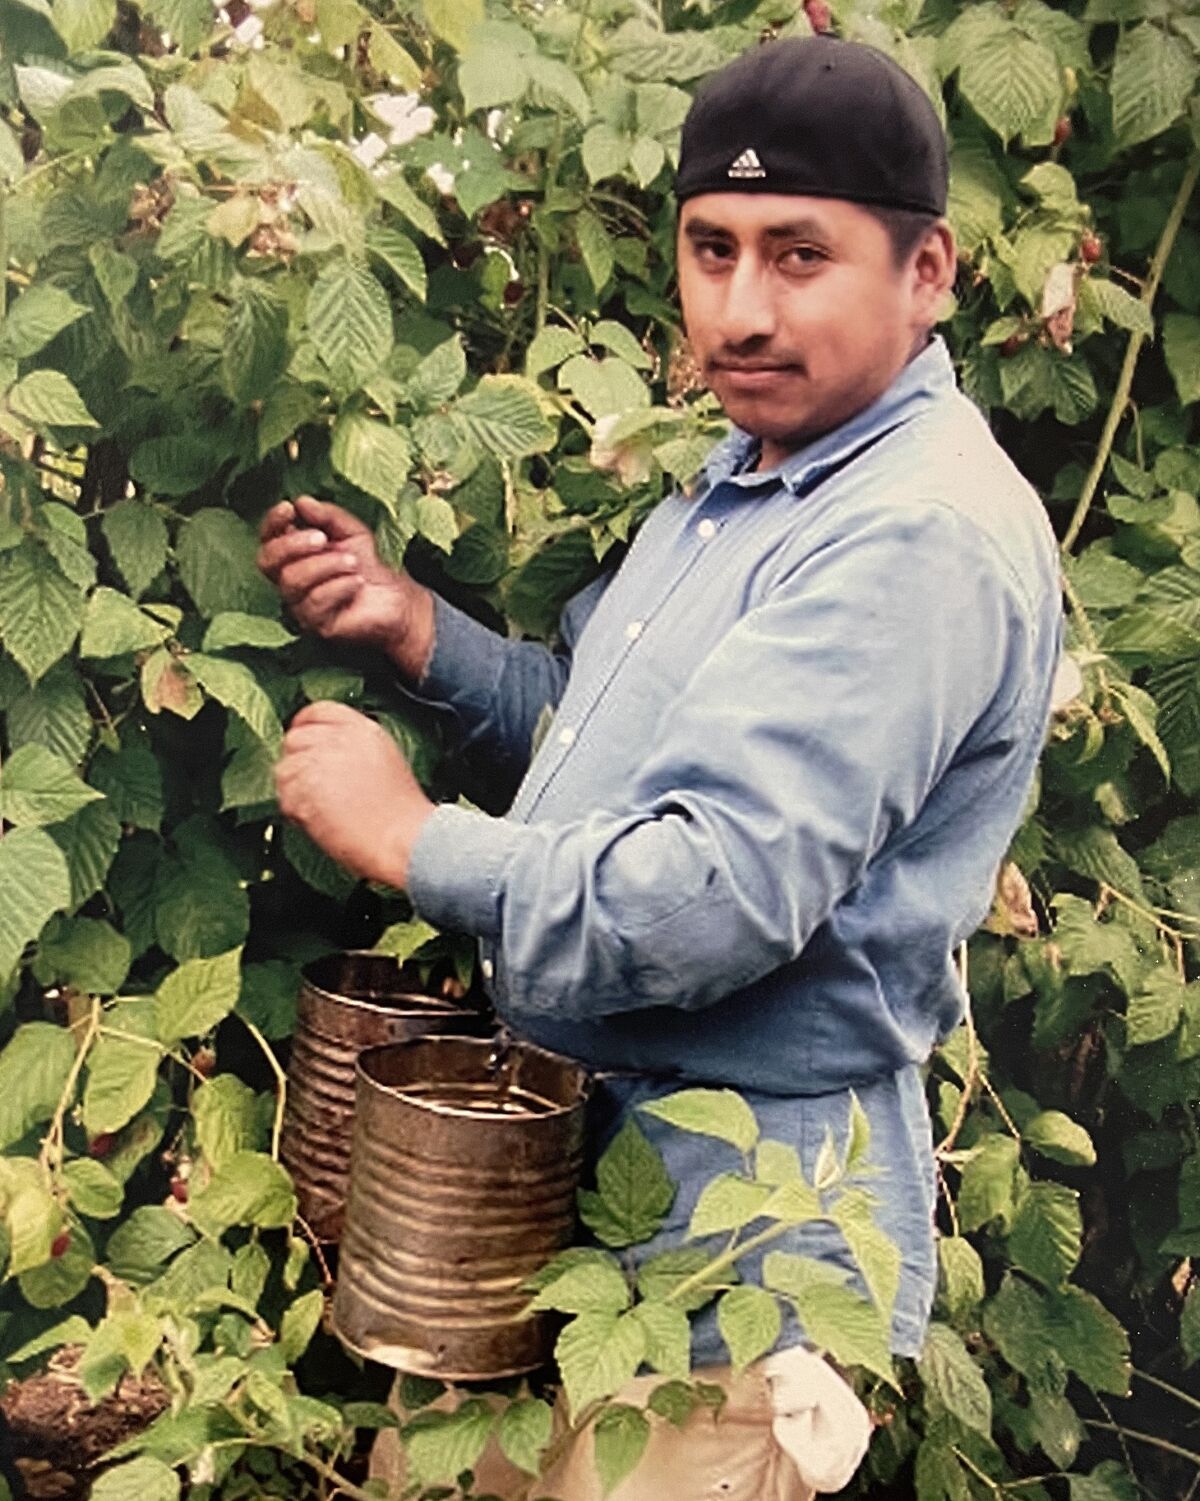 Jaime Villegas, 38, picks raspberries in a farm in Boring, Oregon.